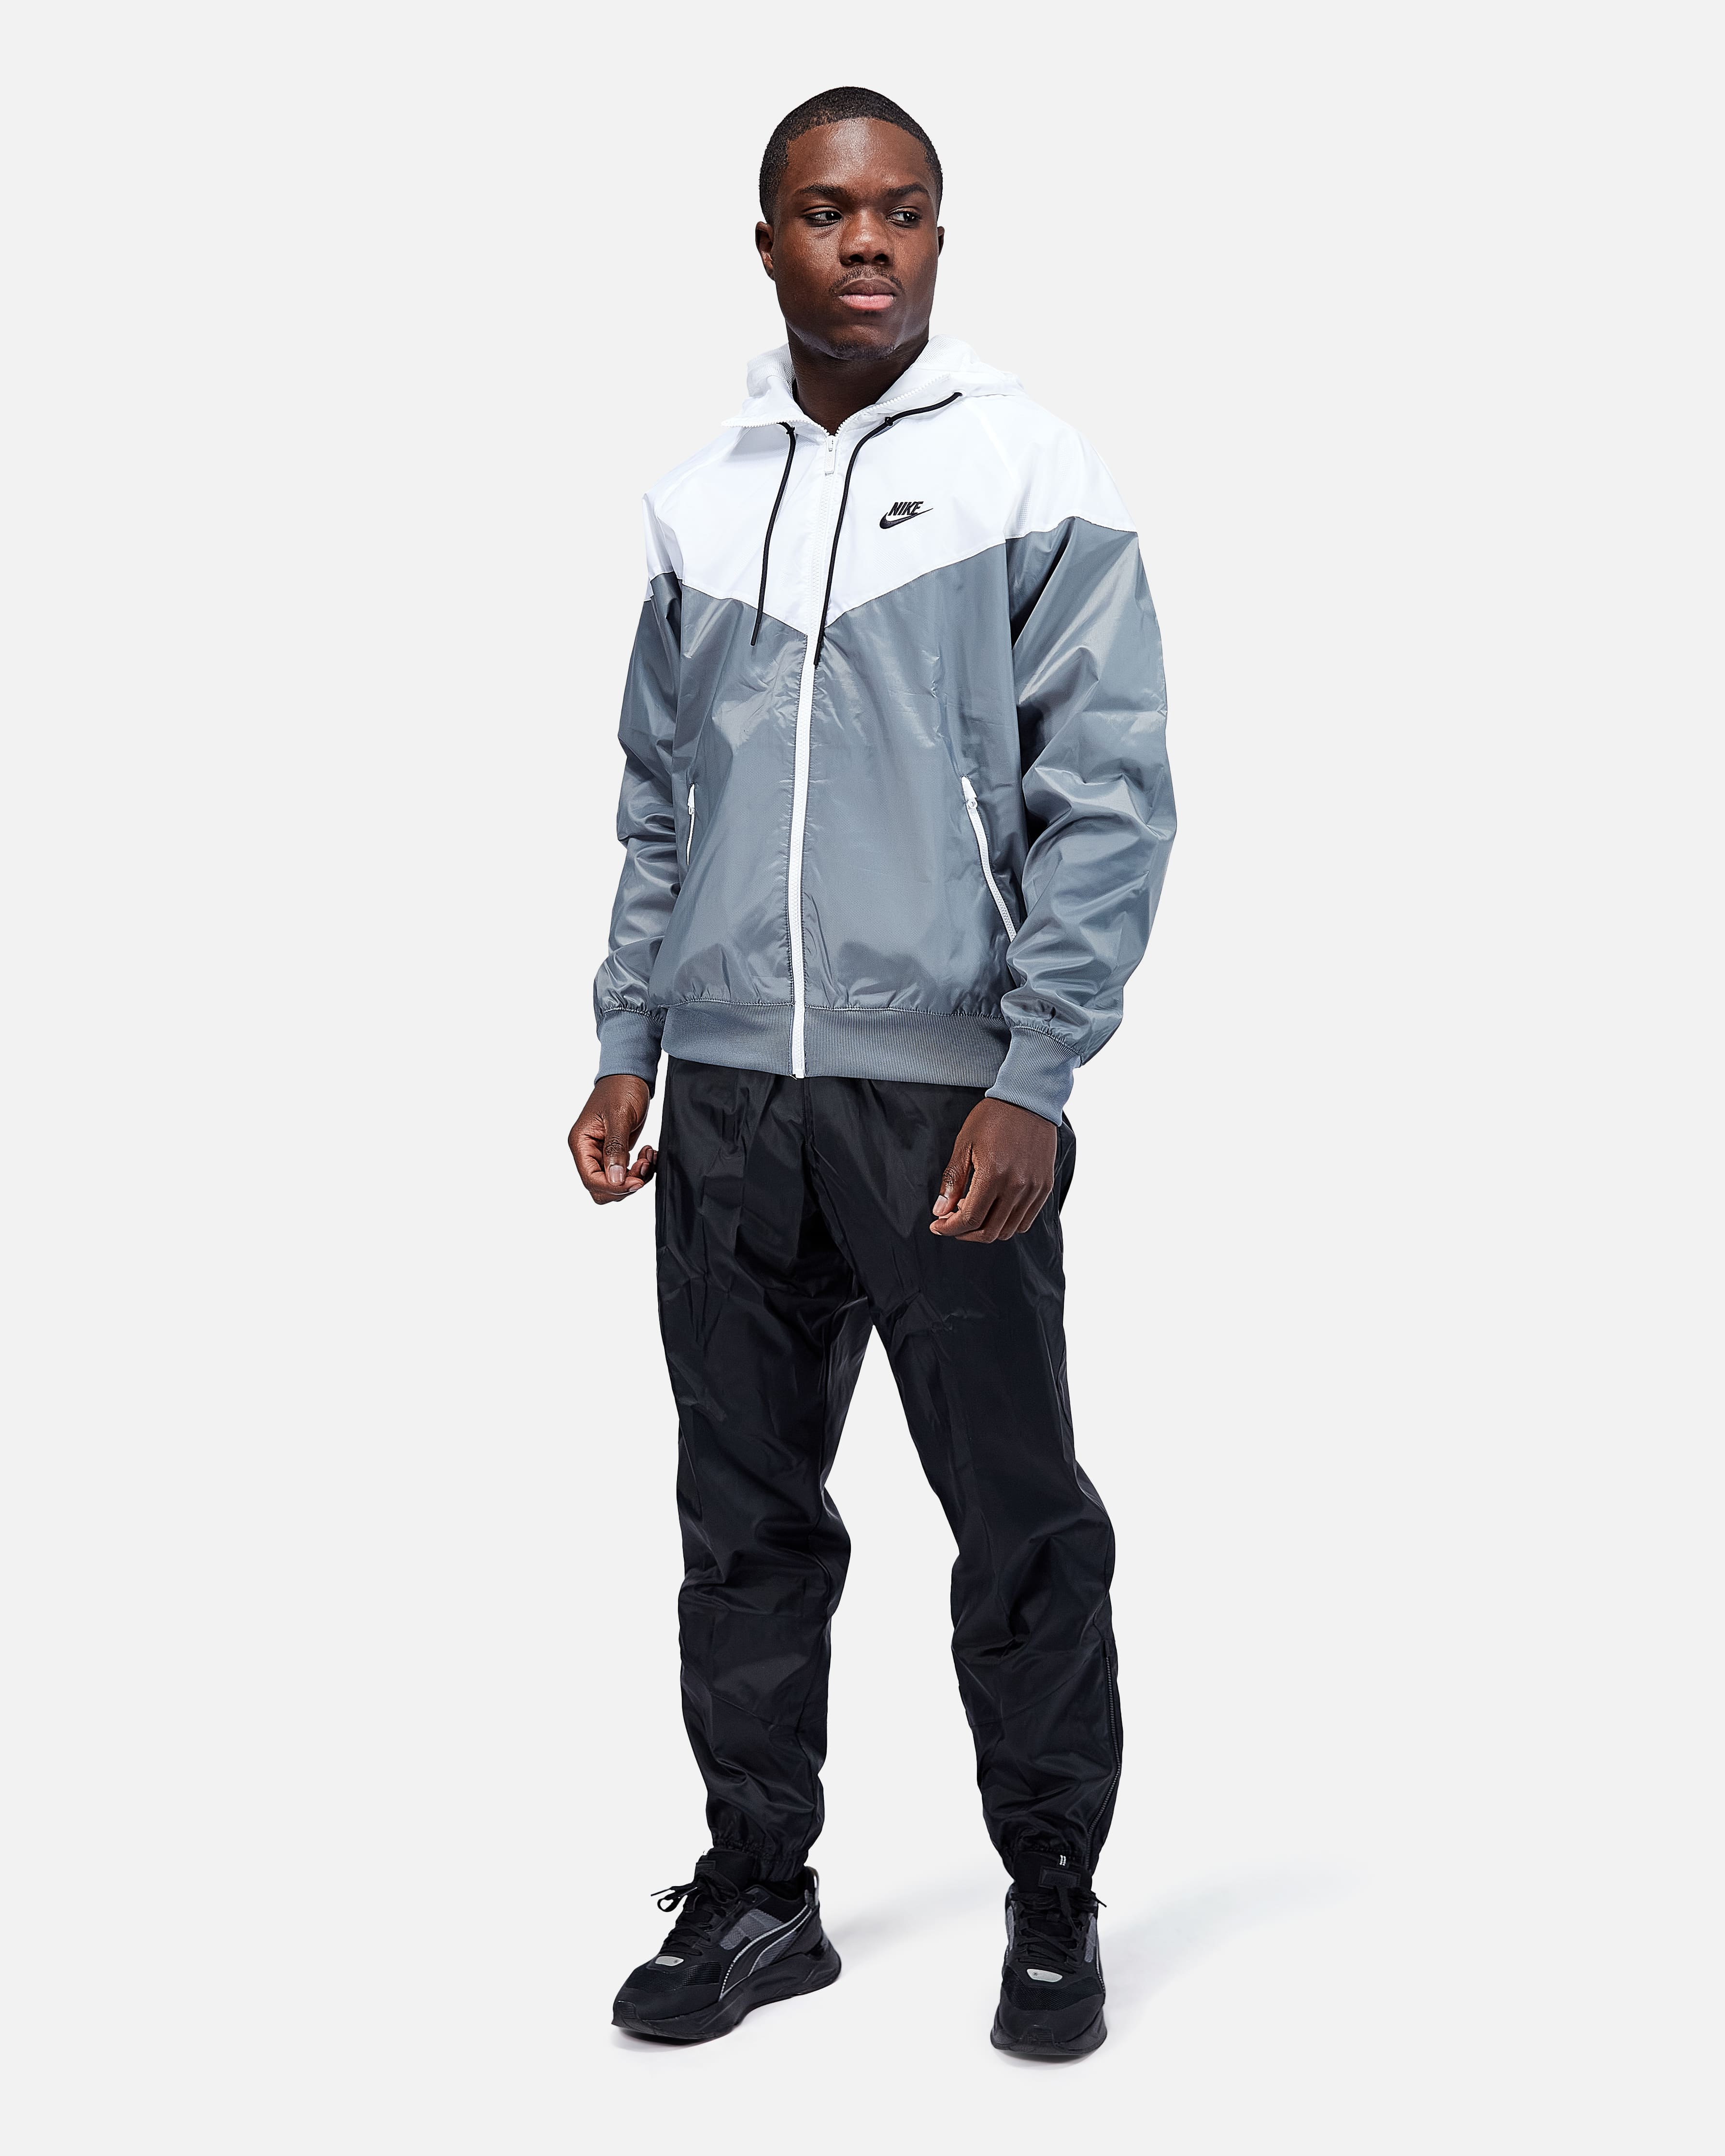 Nike Sportswear Tracksuit - Black/White – Footkorner